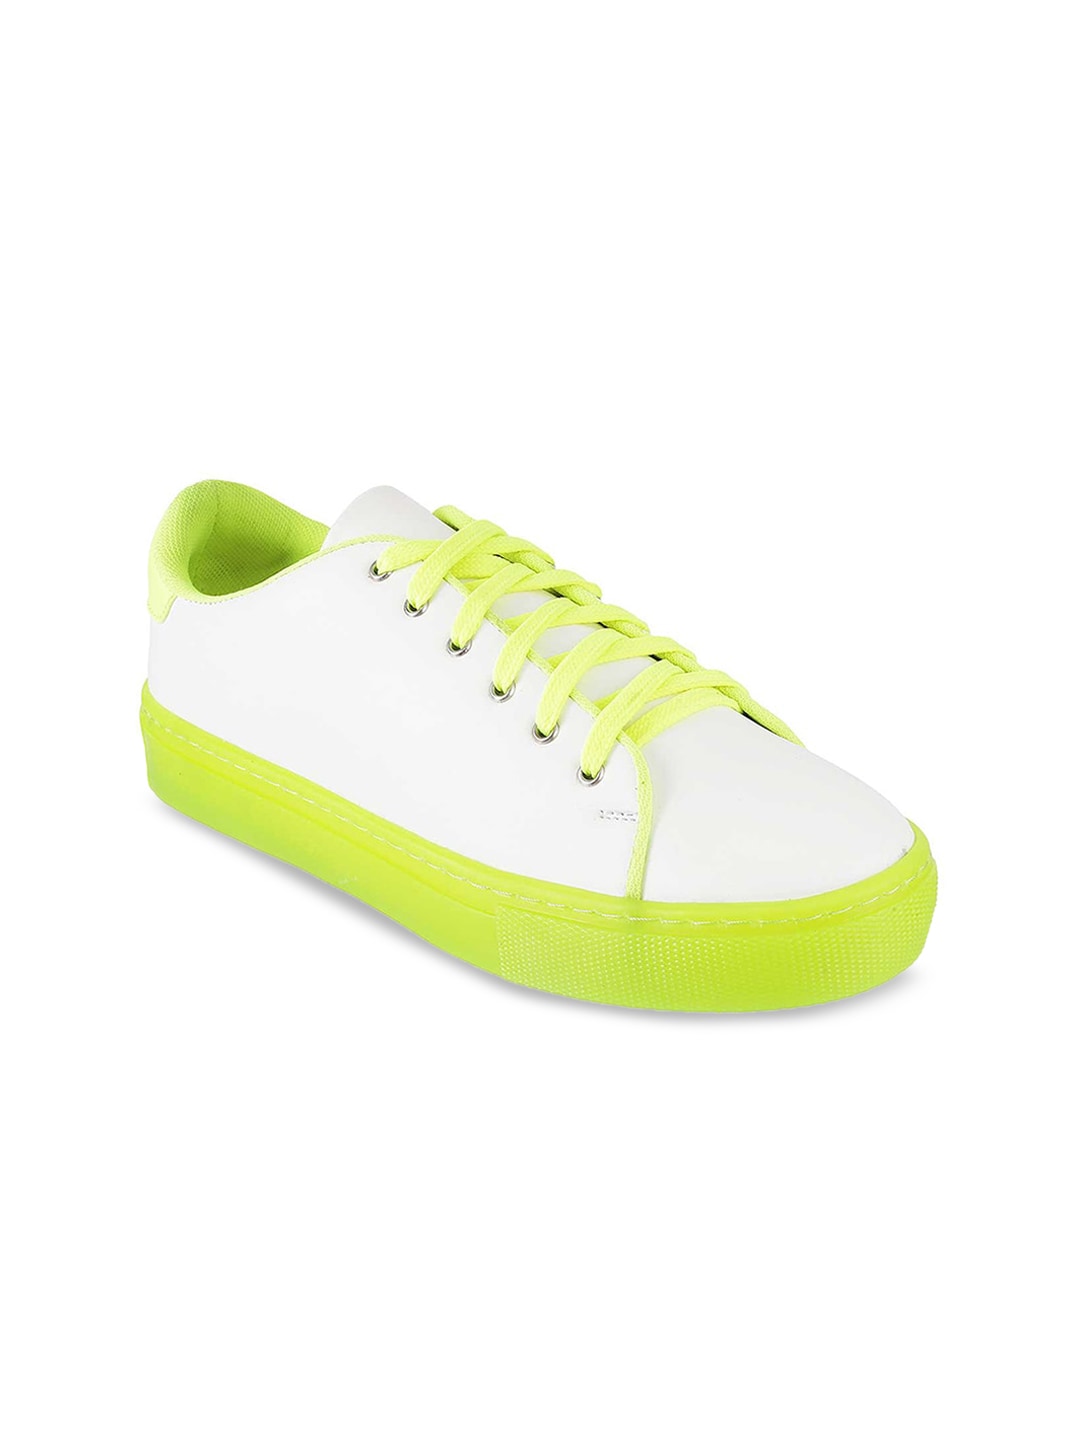 Metro Women White & Fluorescent Green Sneakers Price in India